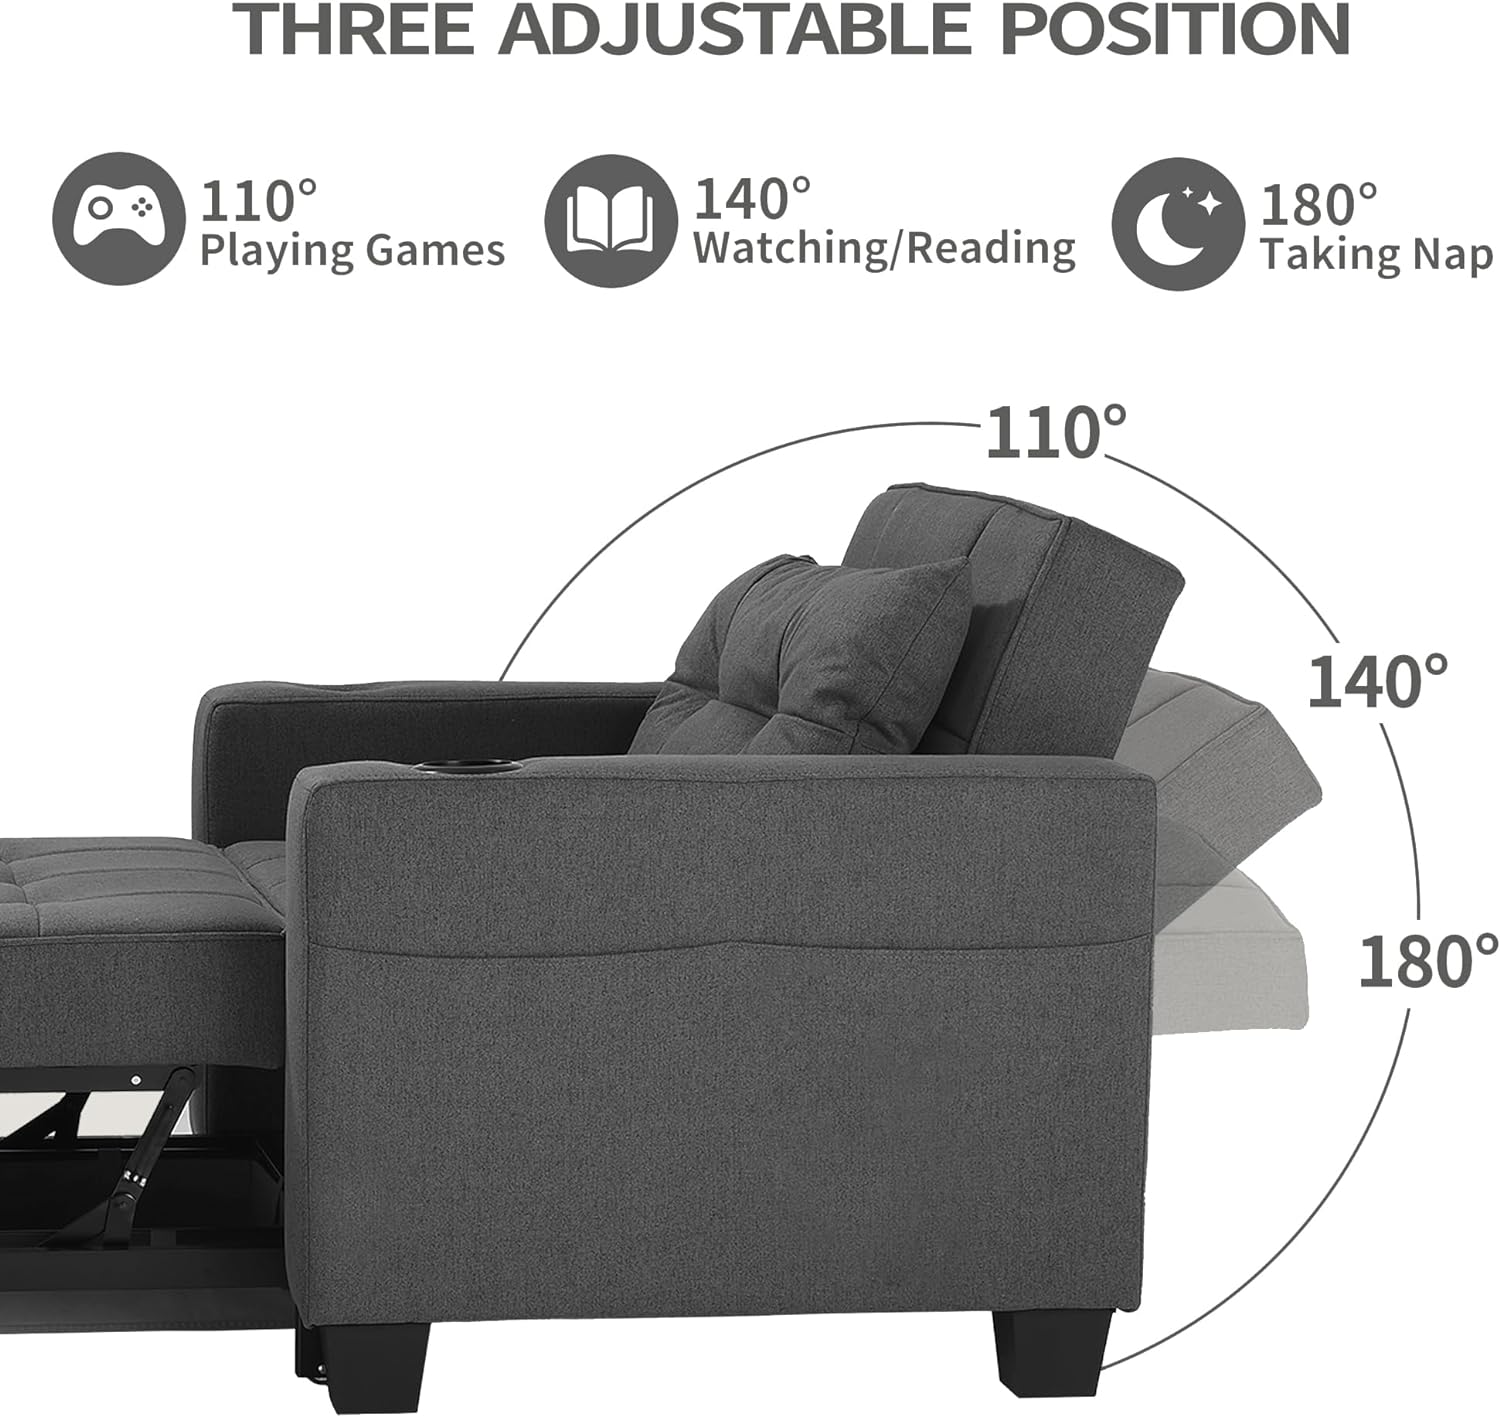 DURASPACE Folding Armchair adjustable positions